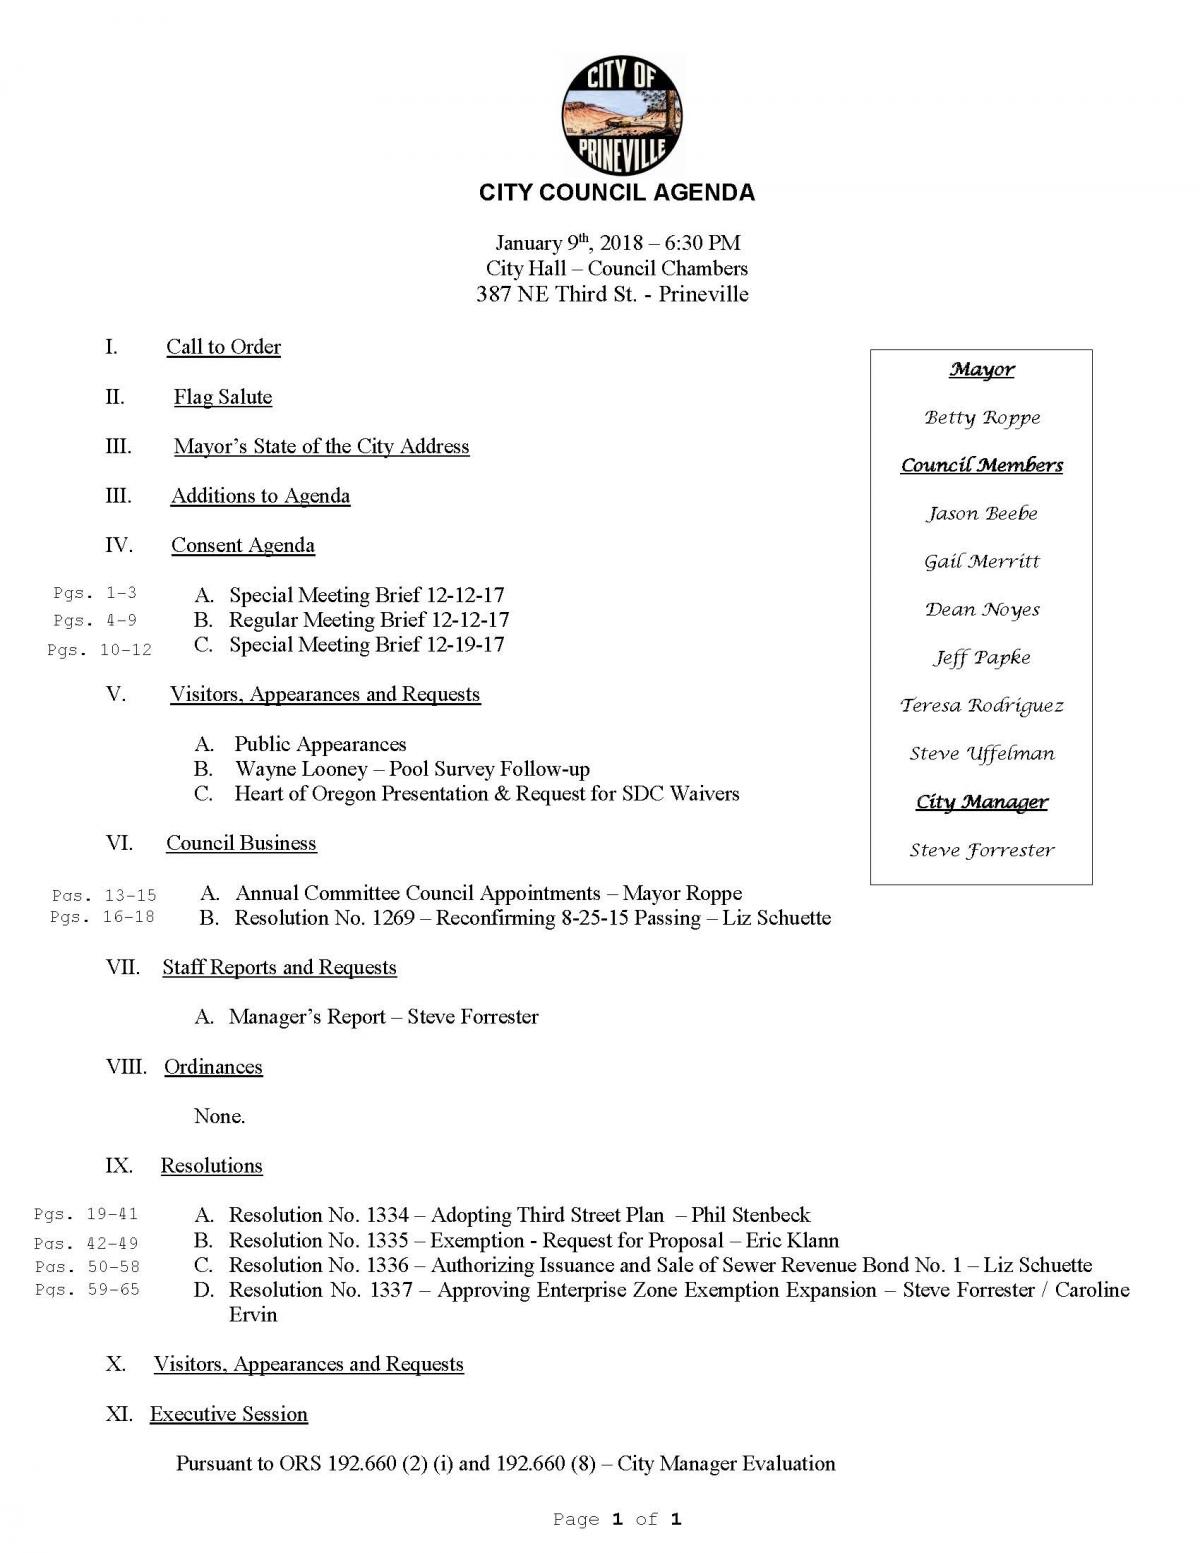 Council Agenda 1-9-18